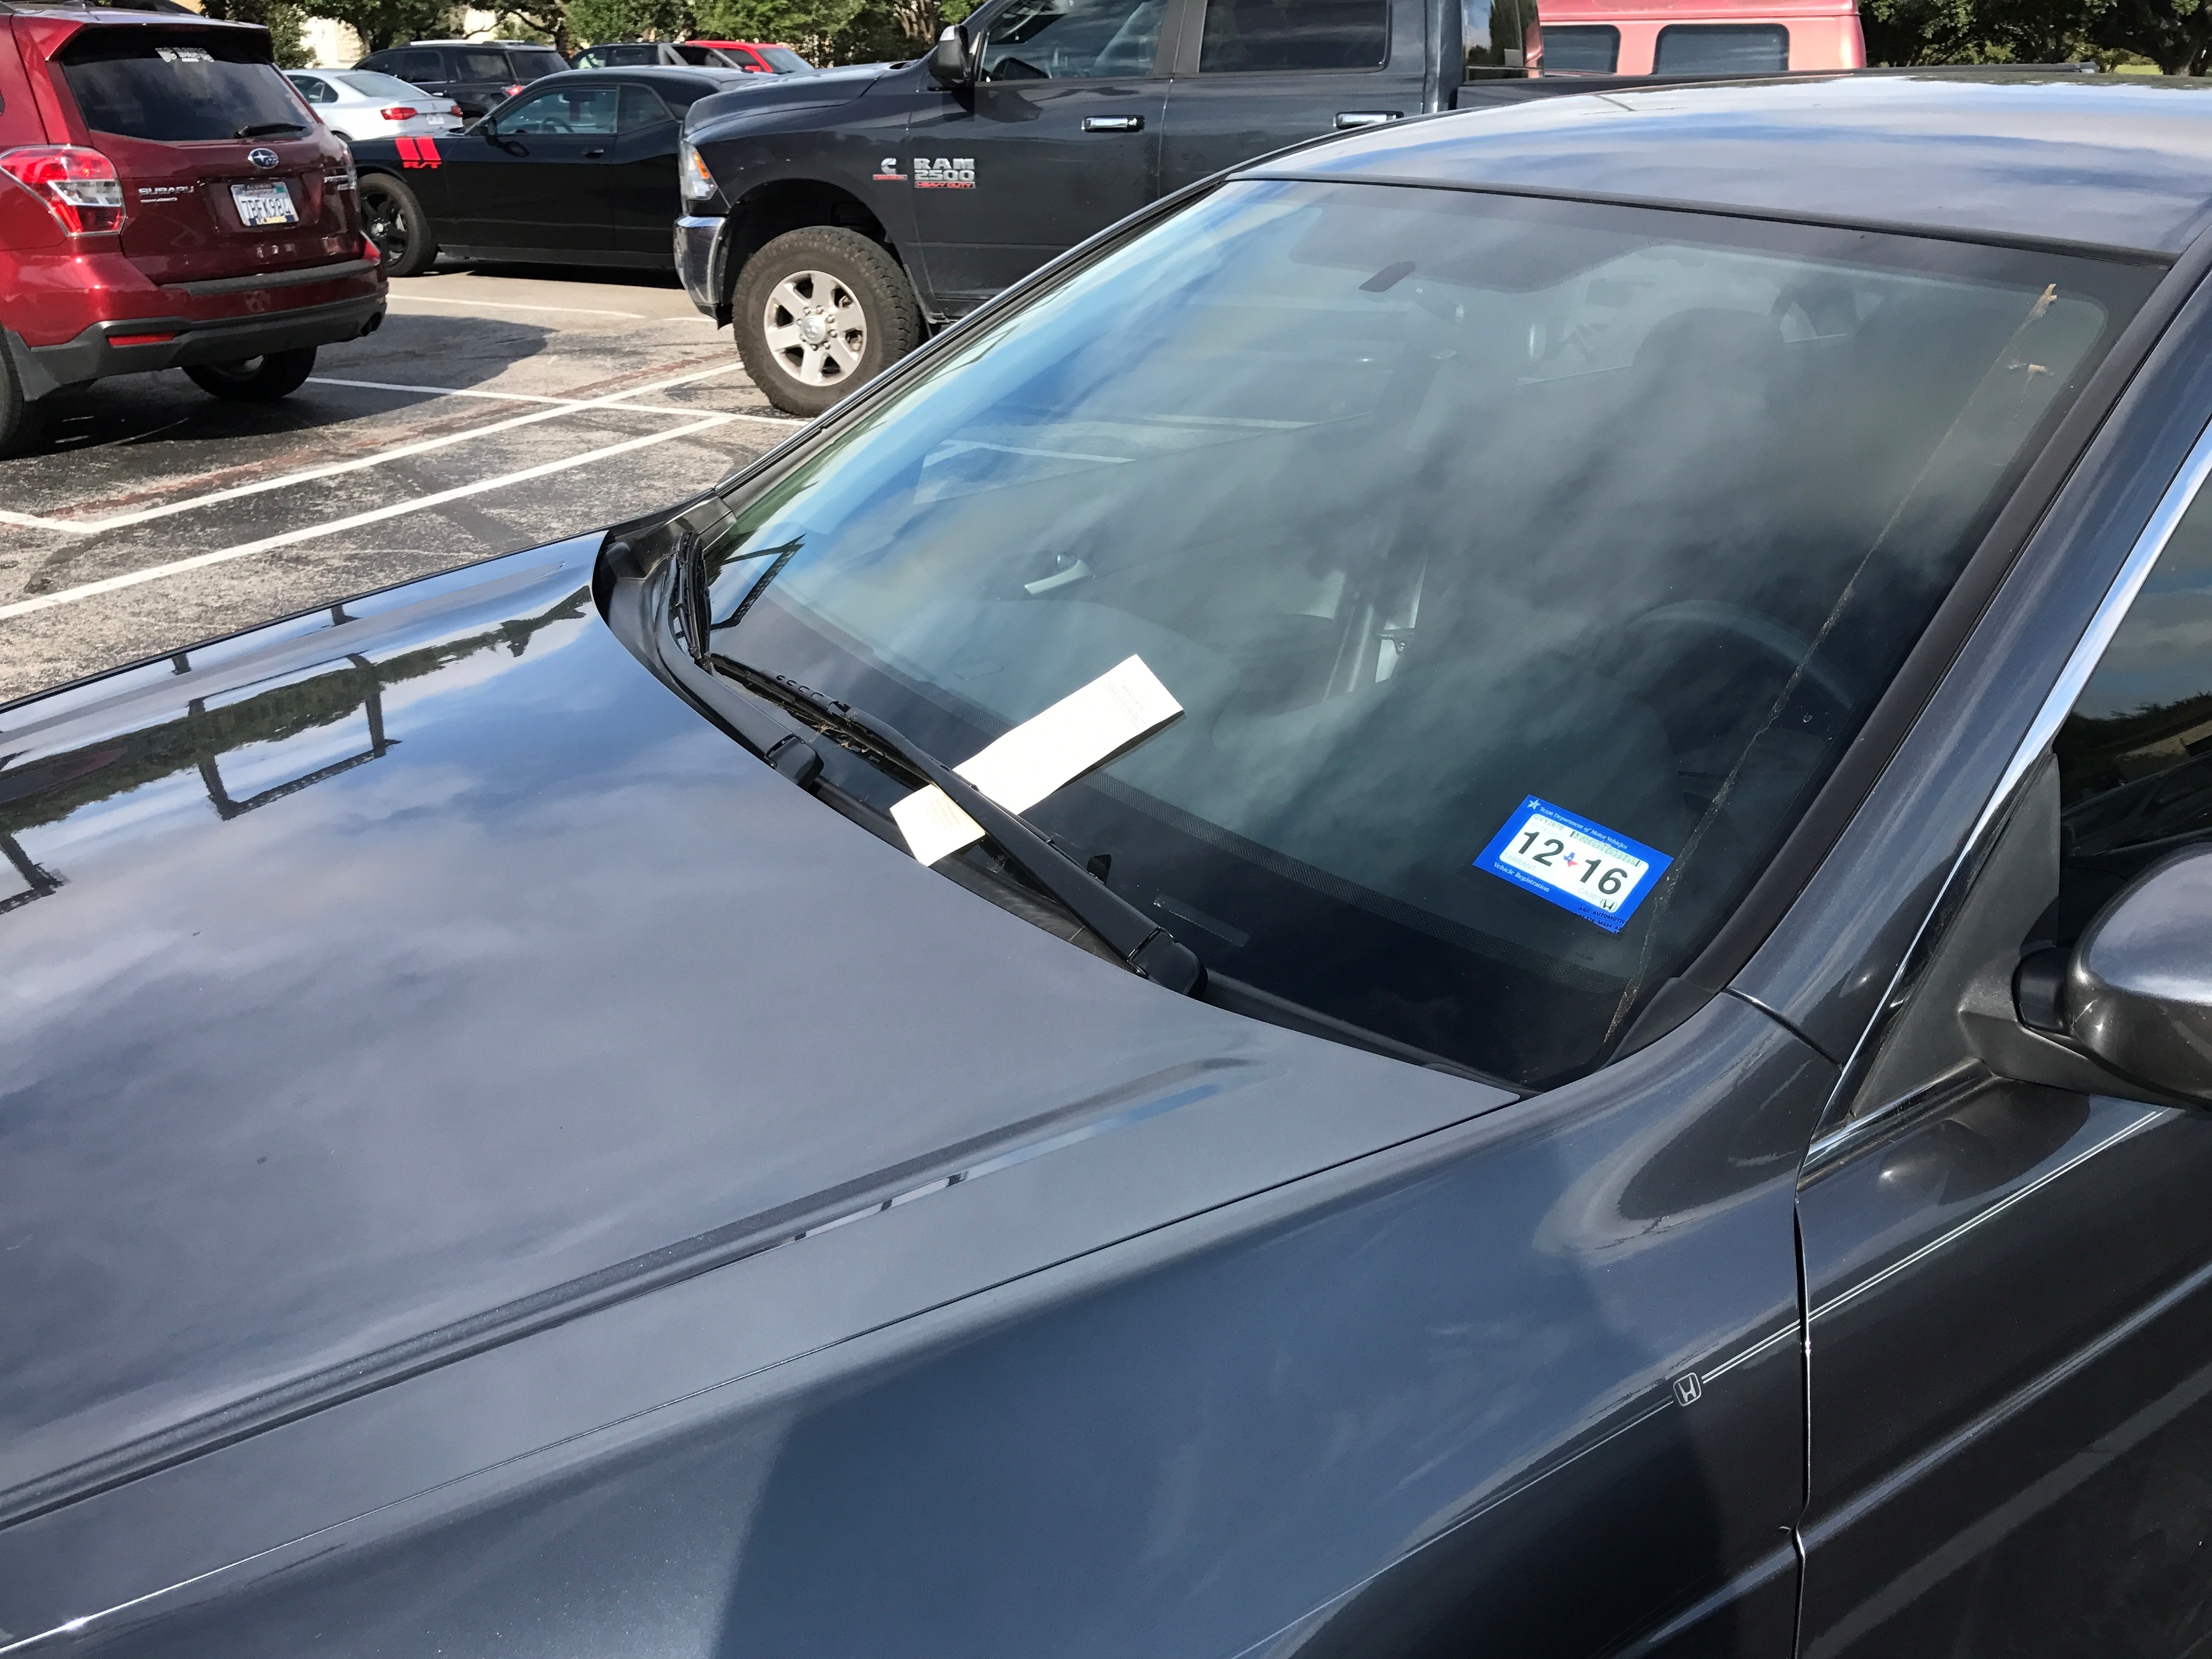 Another recipient of a parking ticket at TCU. 